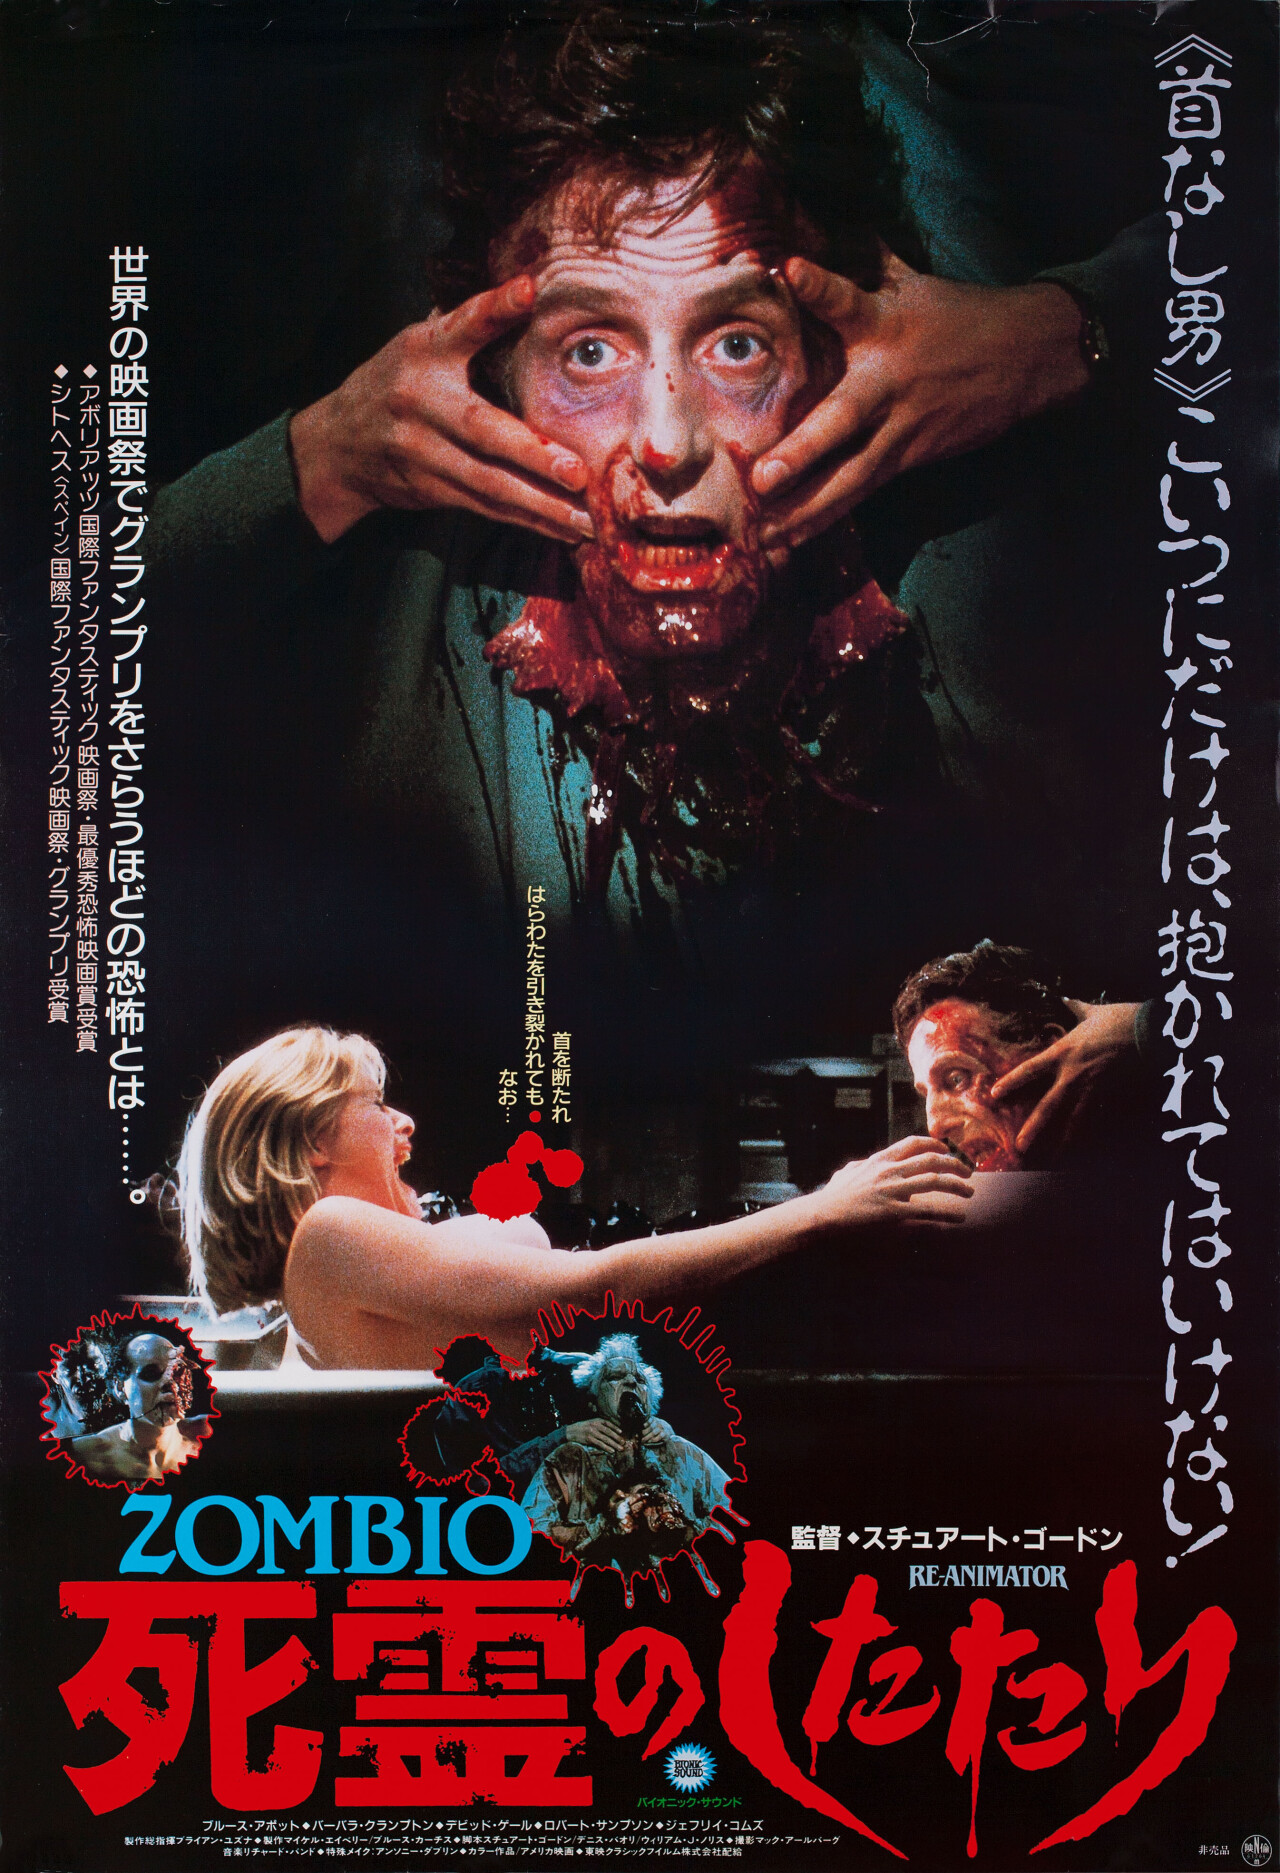 Реаниматор (Re-Animator, 1985), режиссёр Стюарт Гордон, японский постер к фильму (зомби, 1986 год)